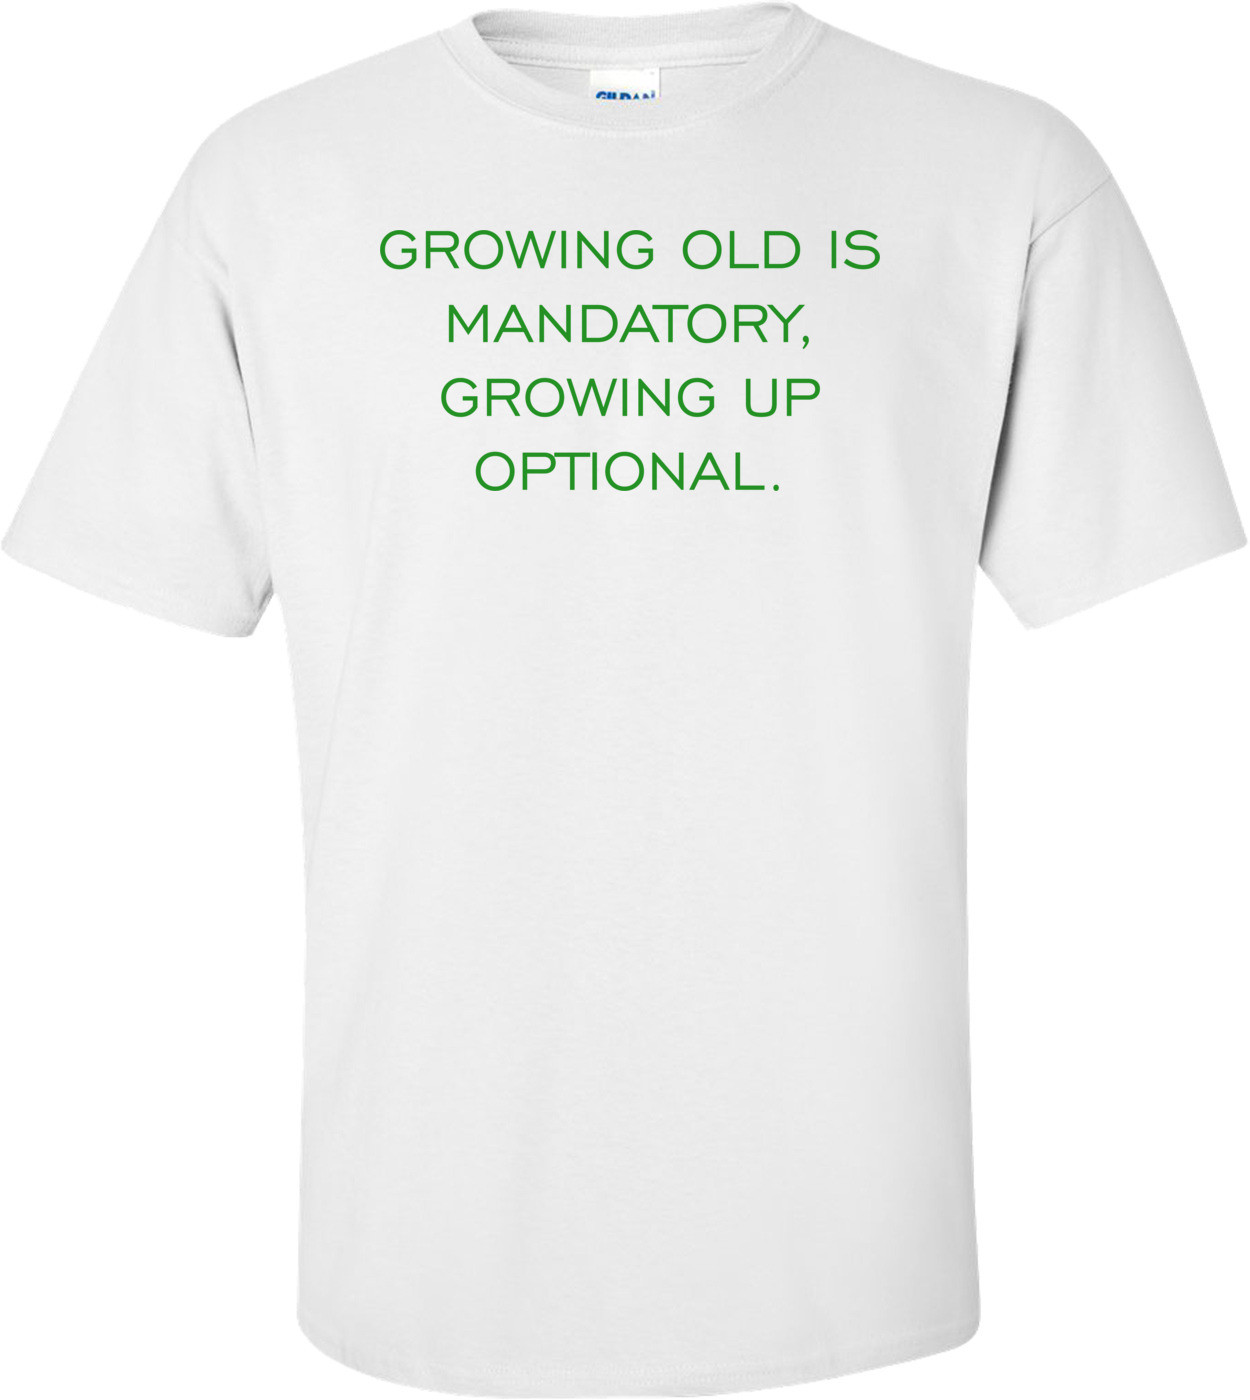 GROWING OLD IS MANDATORY, GROWING UP OPTIONAL. Shirt